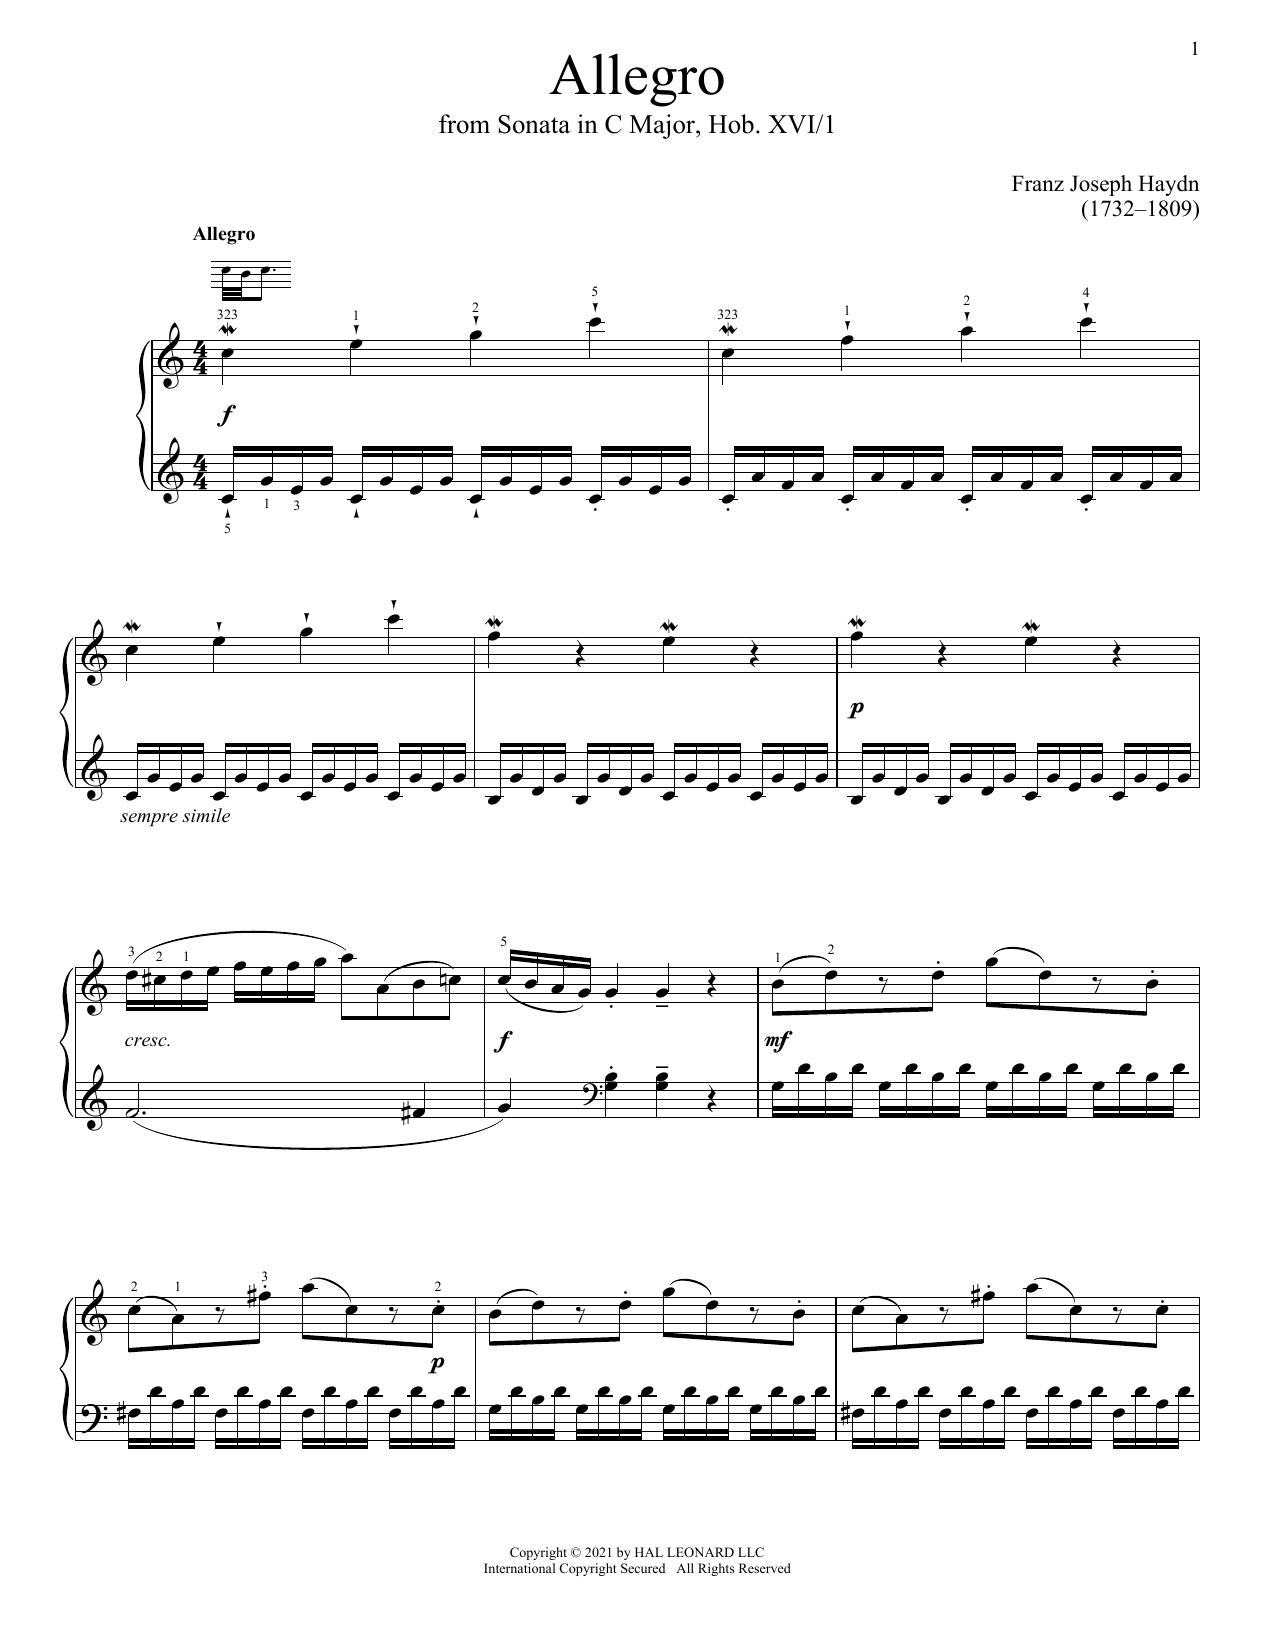 Franz Joseph Haydn Sonata In C Major, Hob. XVI: 1 Sheet Music Notes & Chords for Piano Solo - Download or Print PDF